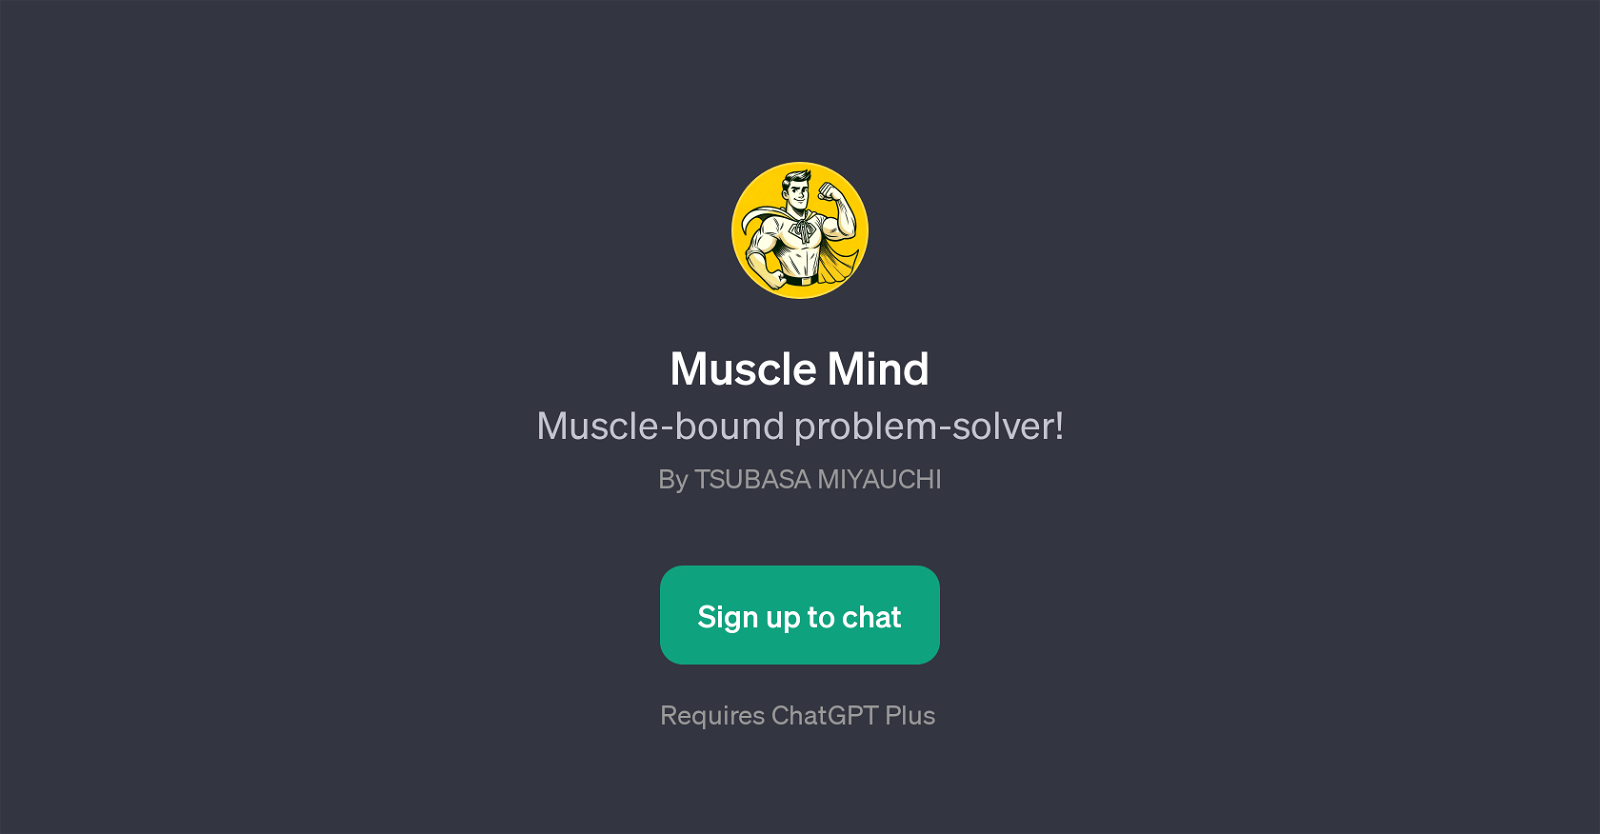 Muscle Mind website